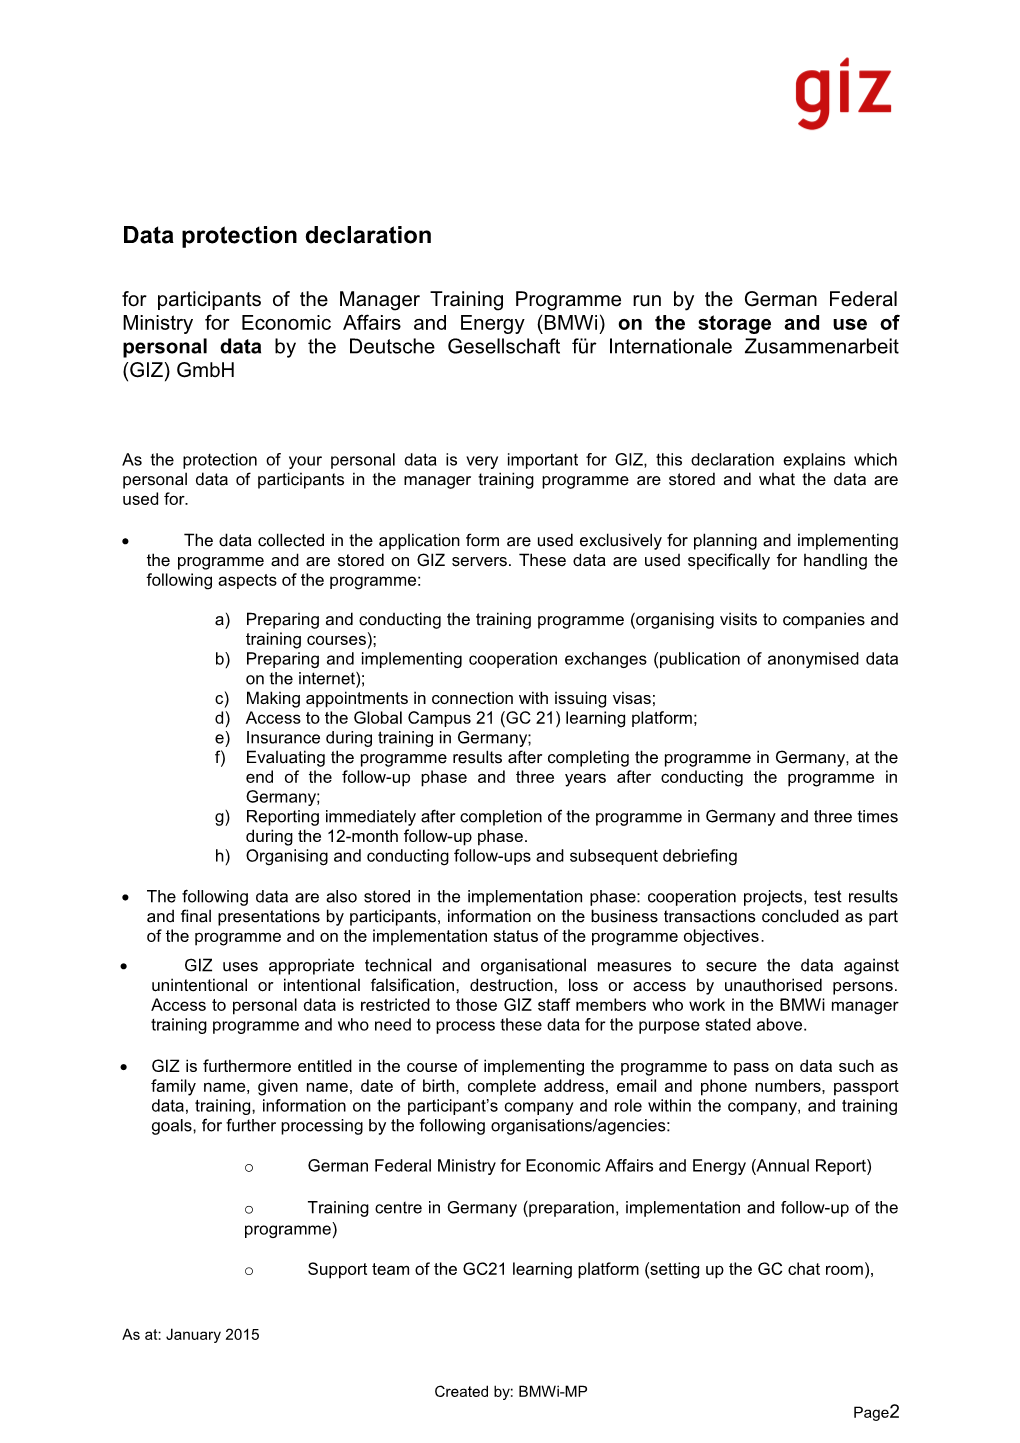 Data Protection Declaration